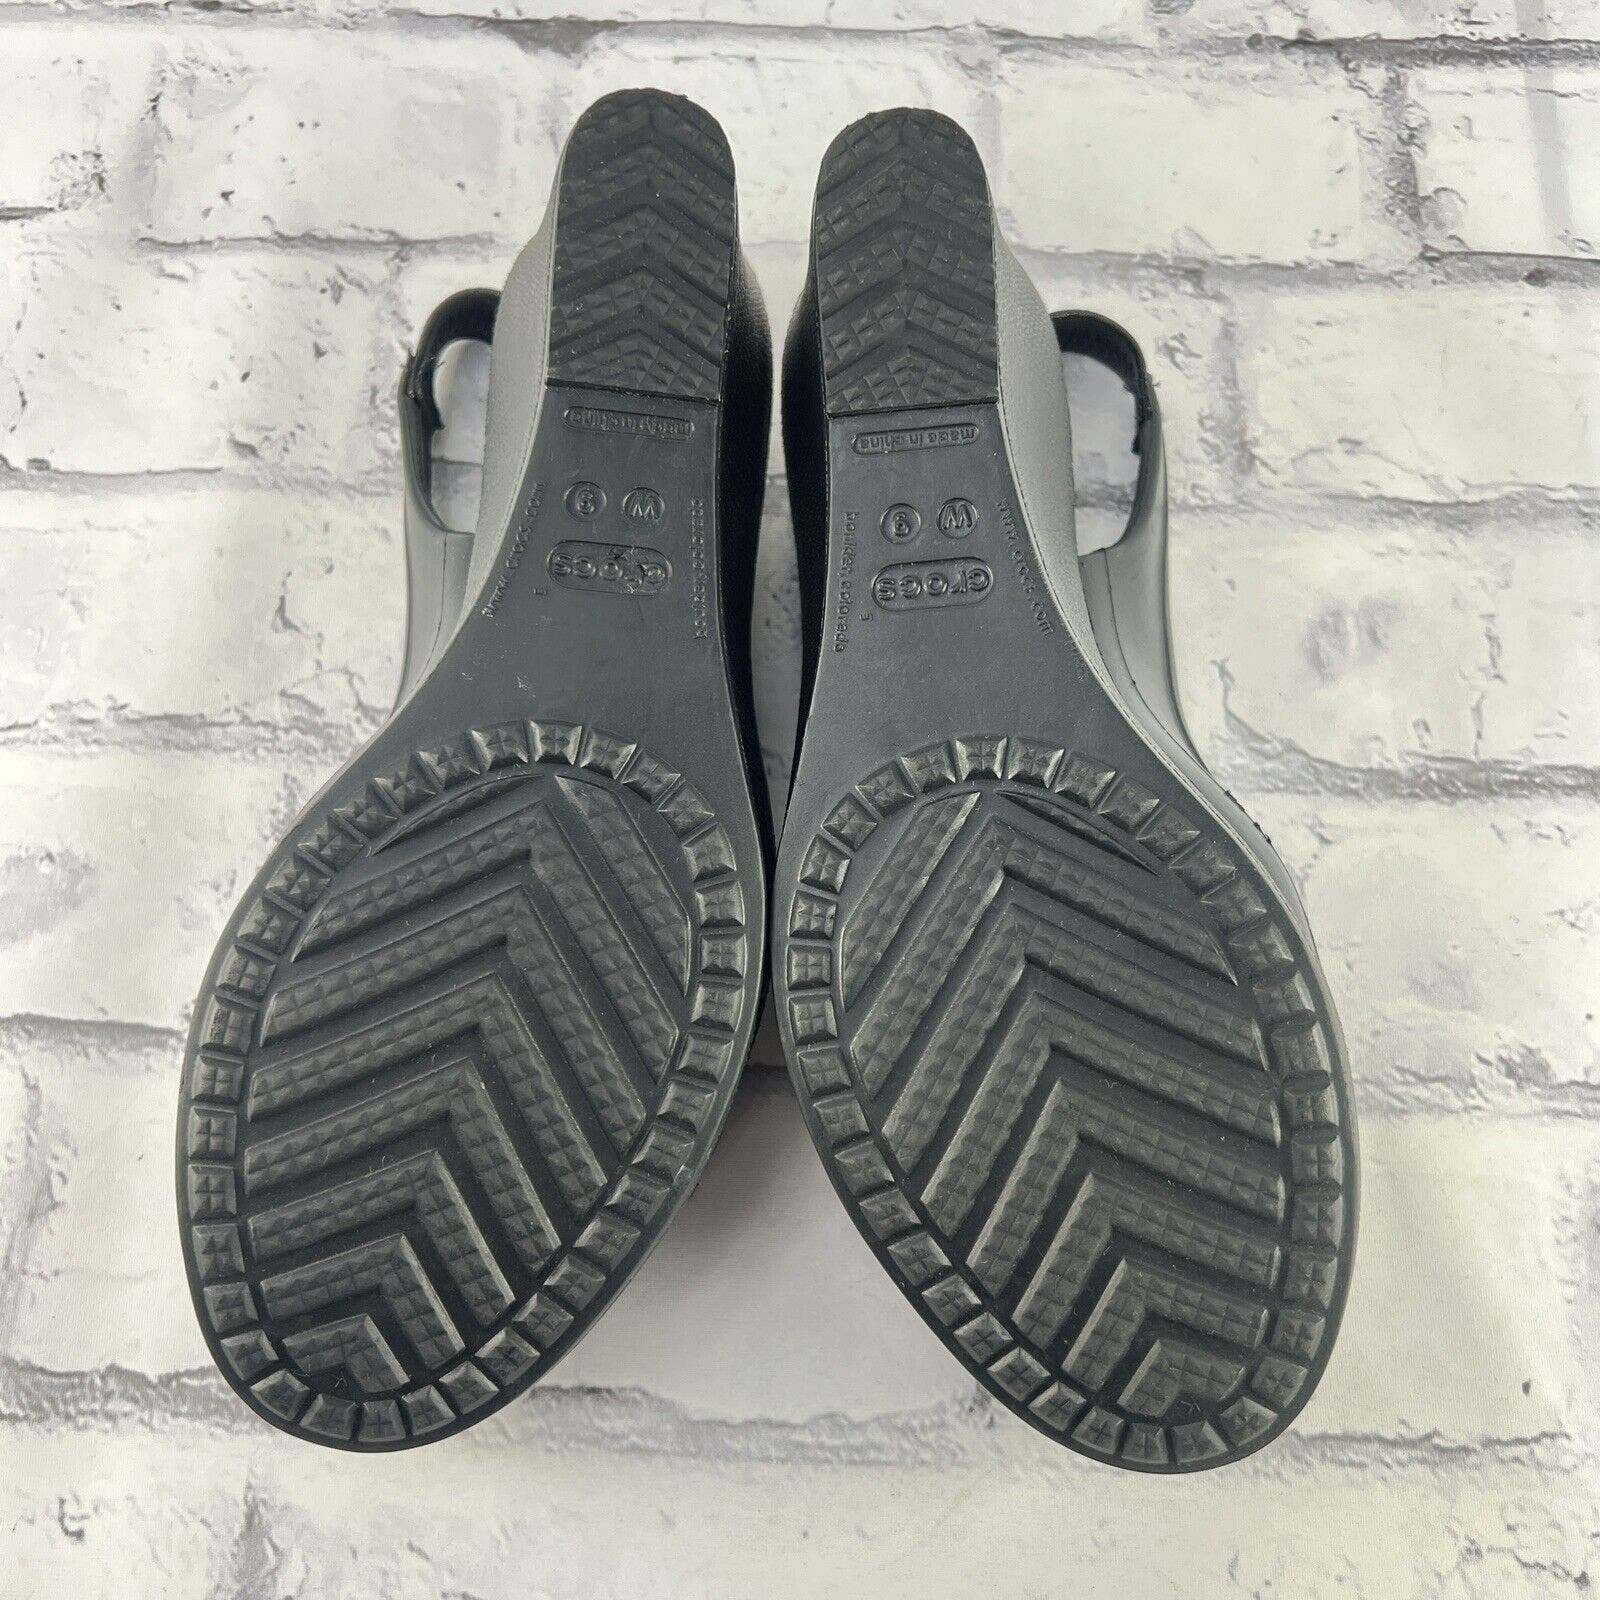 Crocs Farrah Wedge Sandal Women’s 9 Black Platform Slingback Shoes Peep Toe